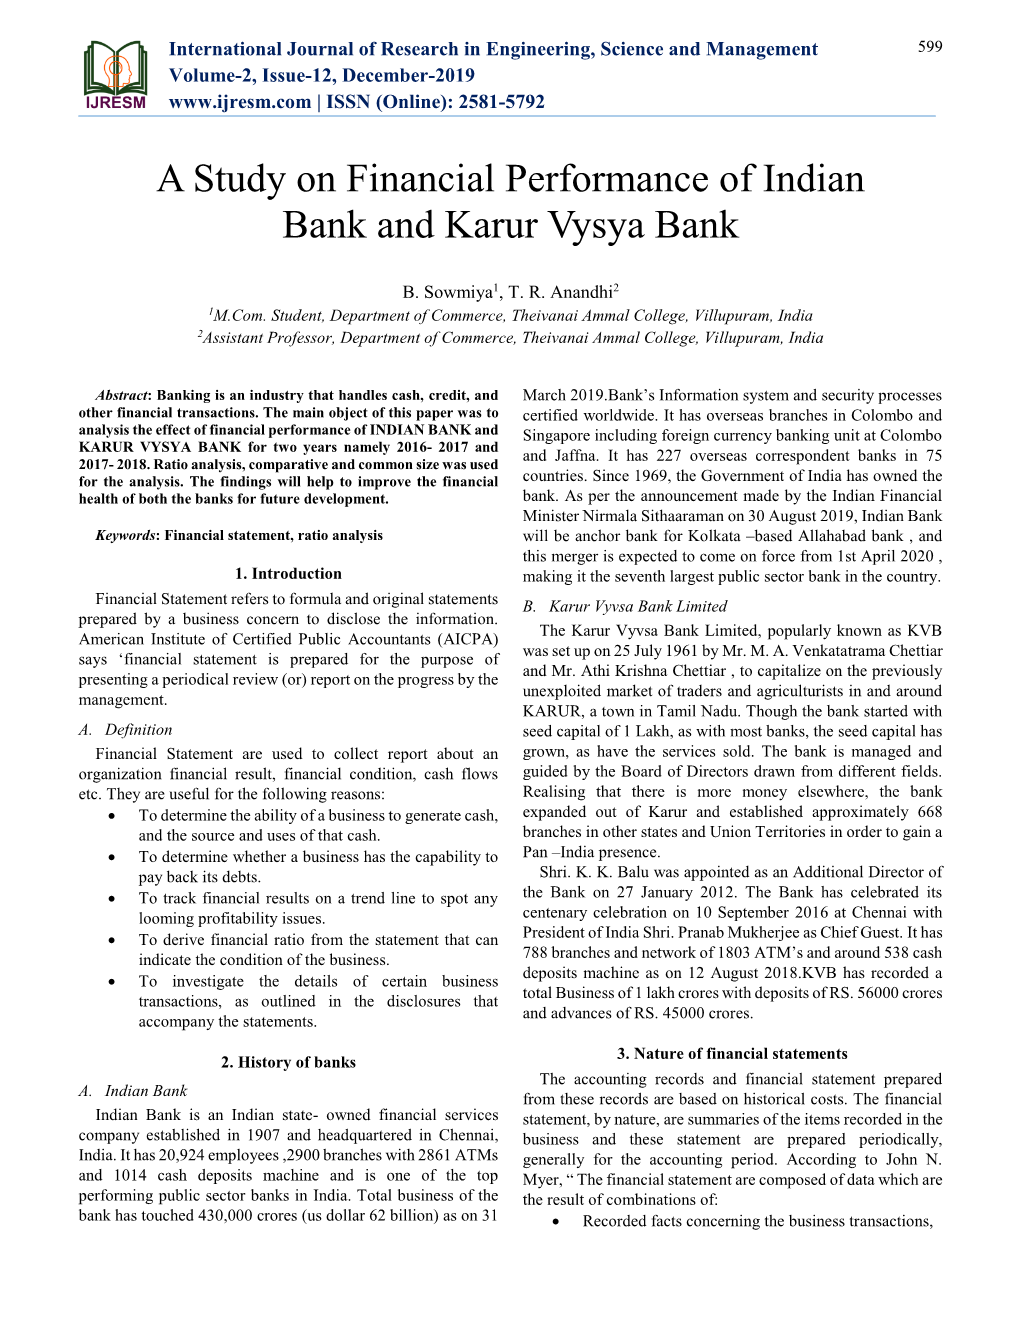 A Study on Financial Performance of Indian Bank and Karur Vysya Bank